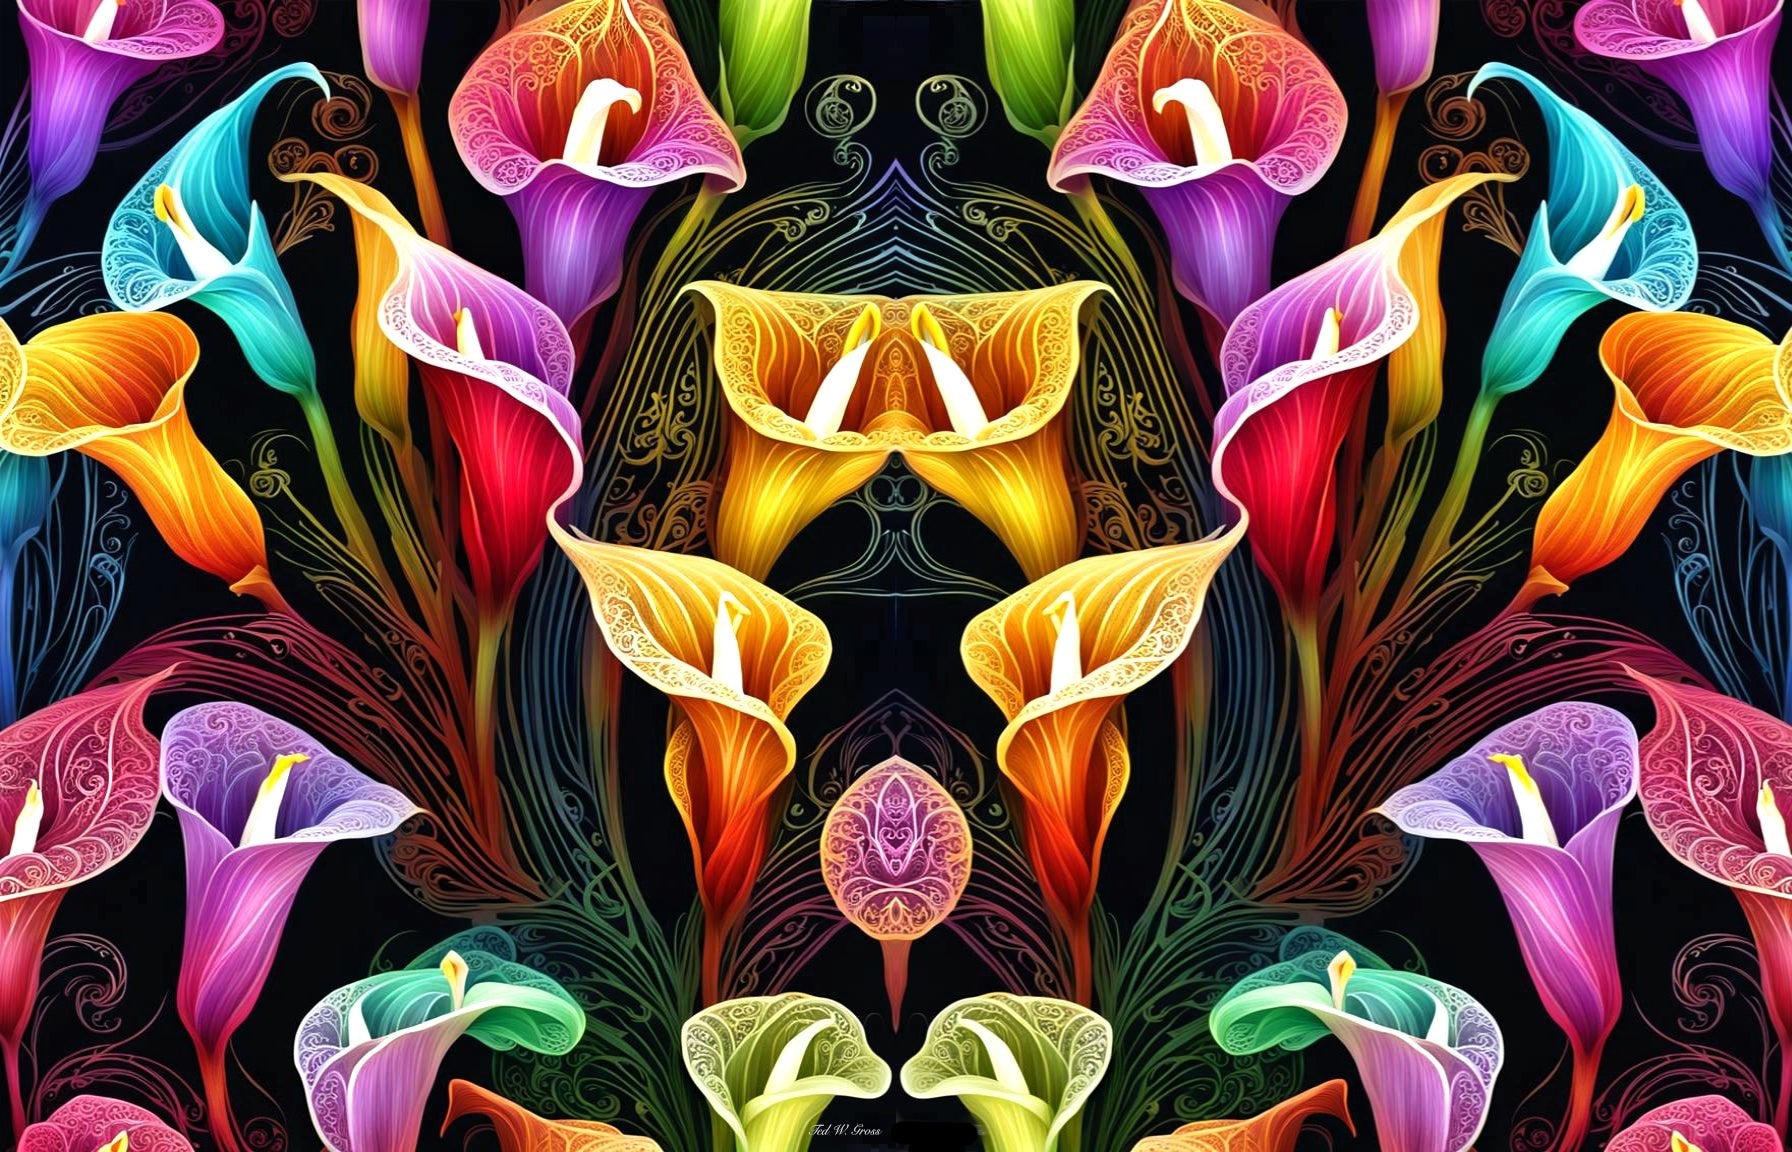 Petal Vortex - Floral & Filigree Digital Art Art > Digital Art > Cobwebs Of The Mind > Abstract > Digital Compositions